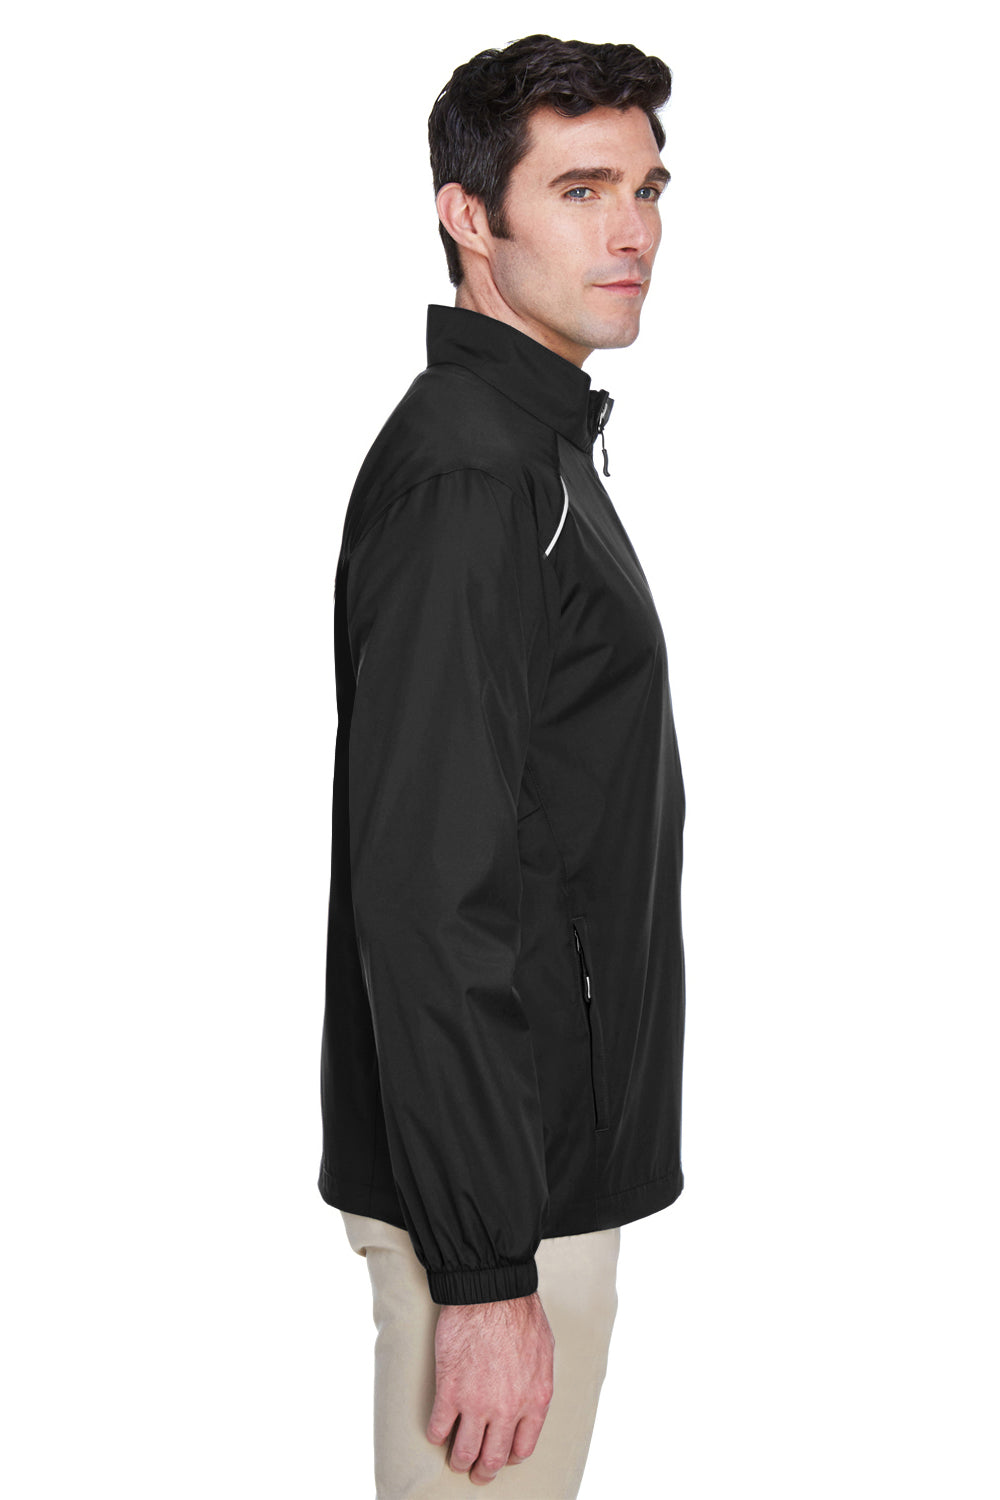 Core 365 88183 Mens Motivate Water Resistant Full Zip Jacket Black Side